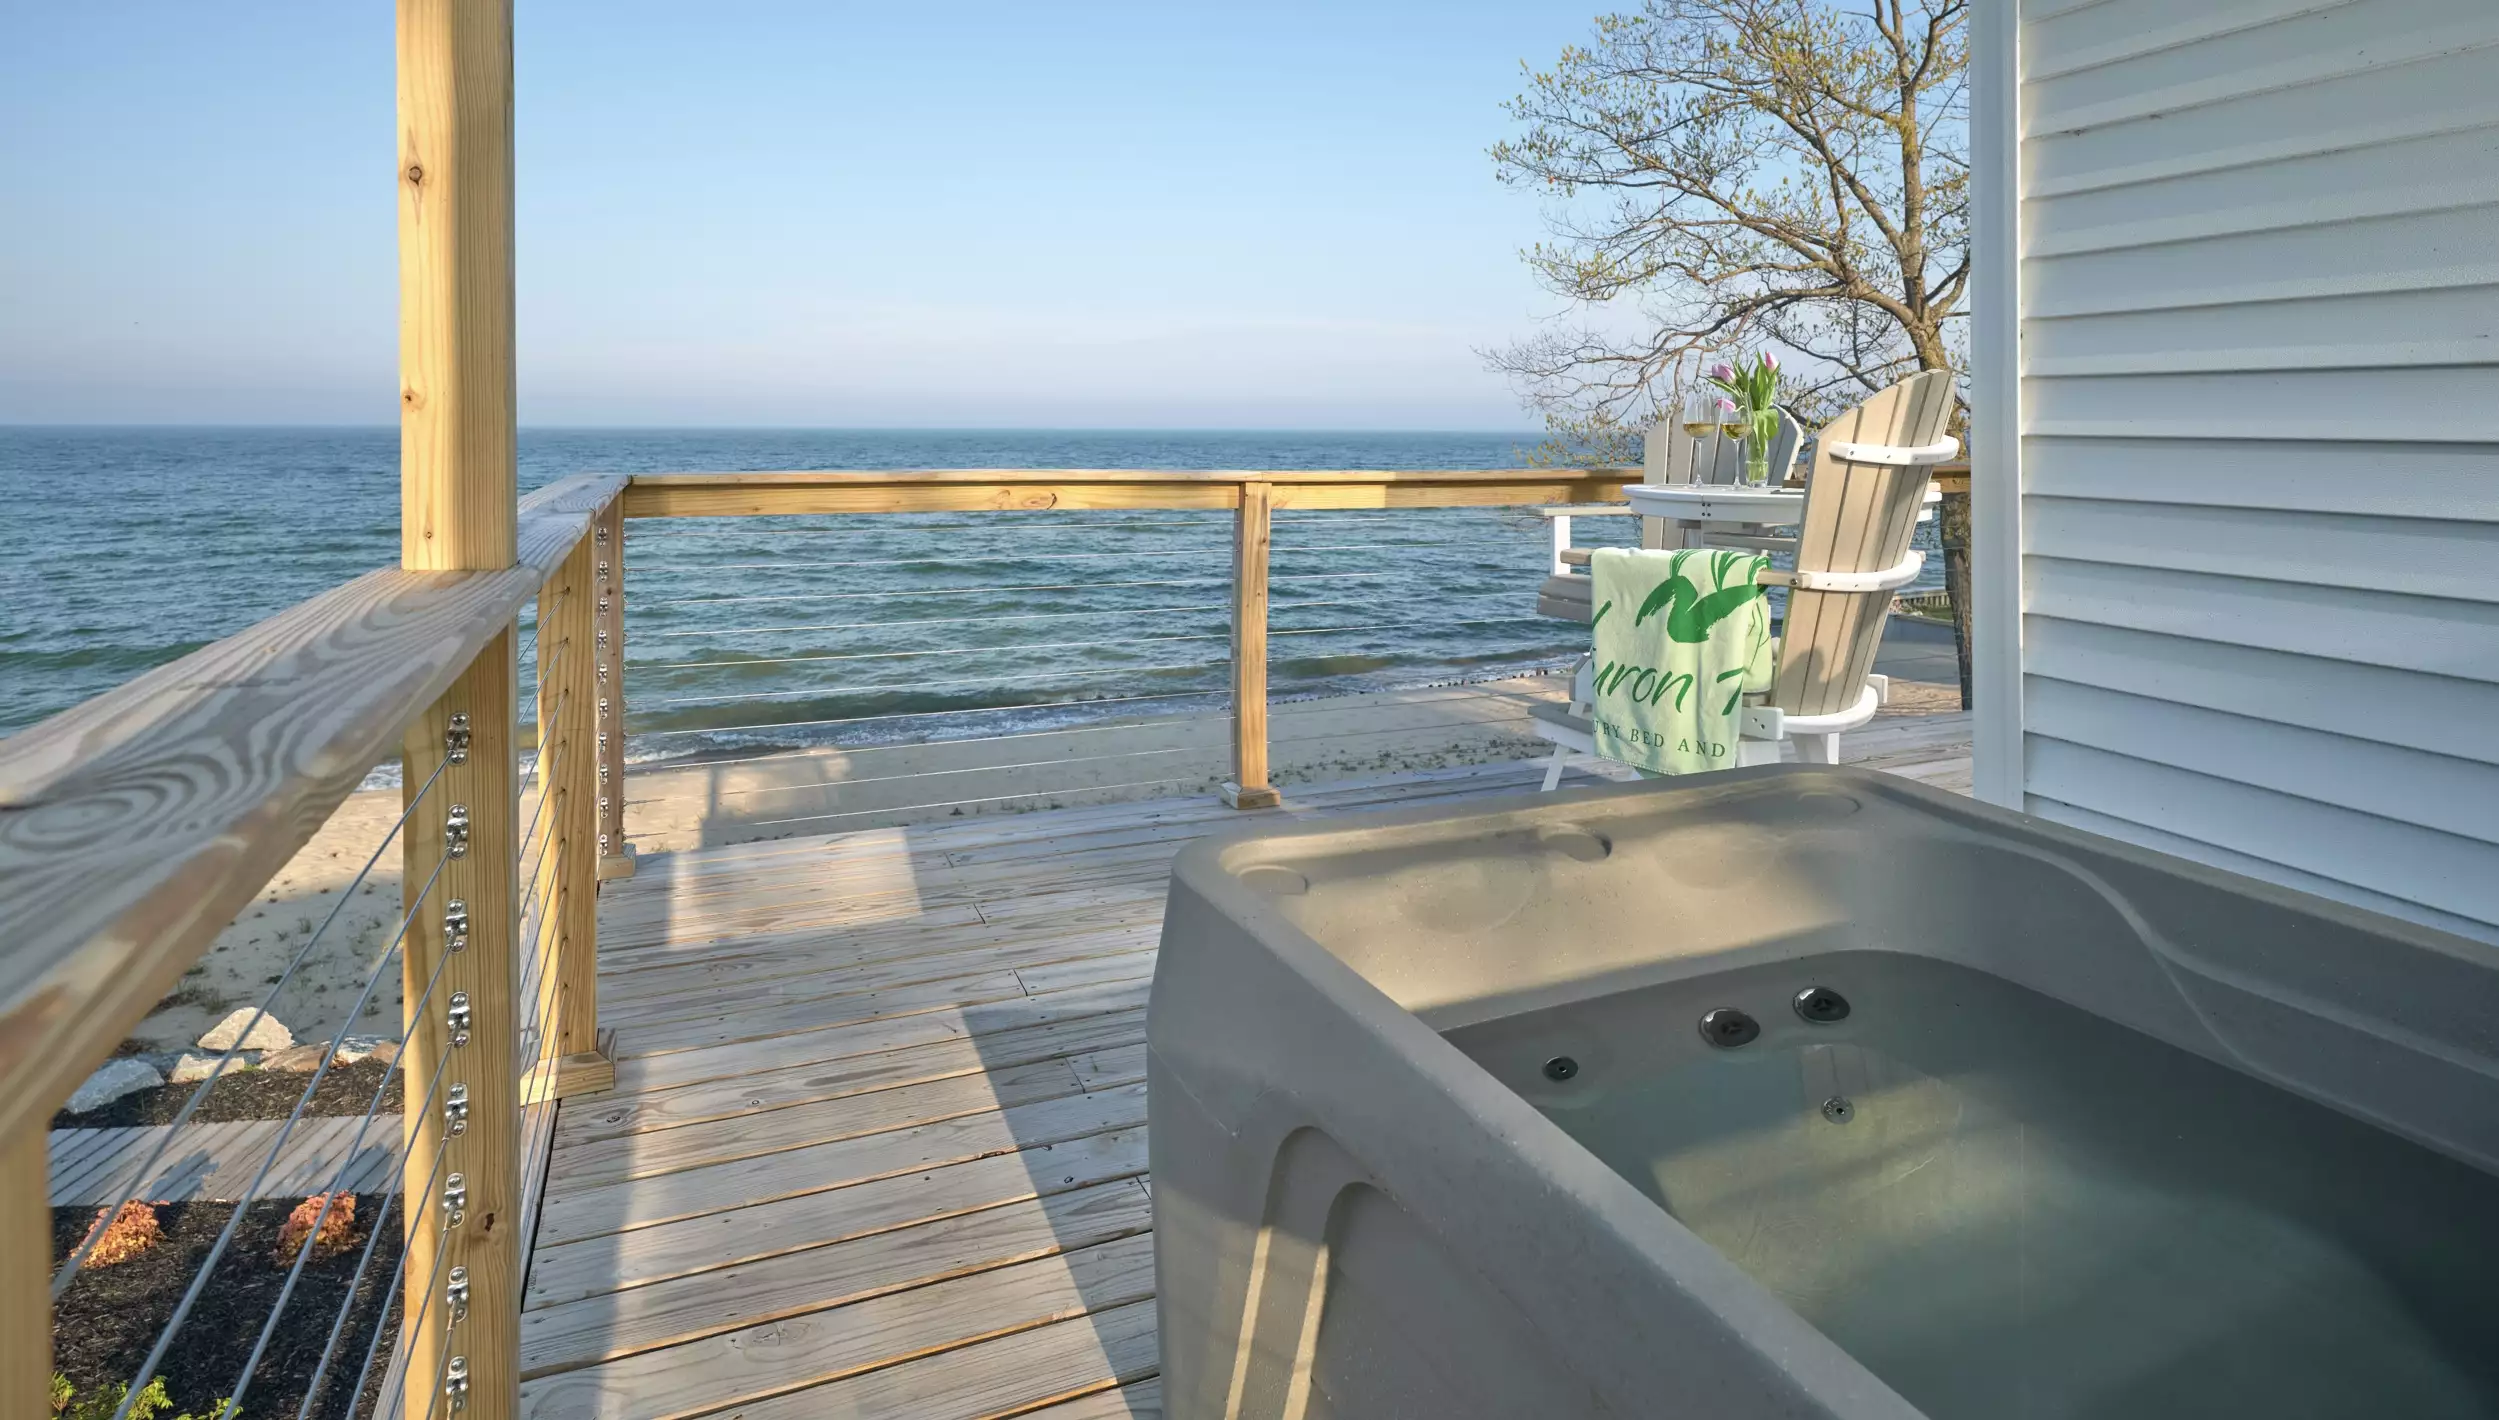 Outdoor hot tub with views of Lake Huron